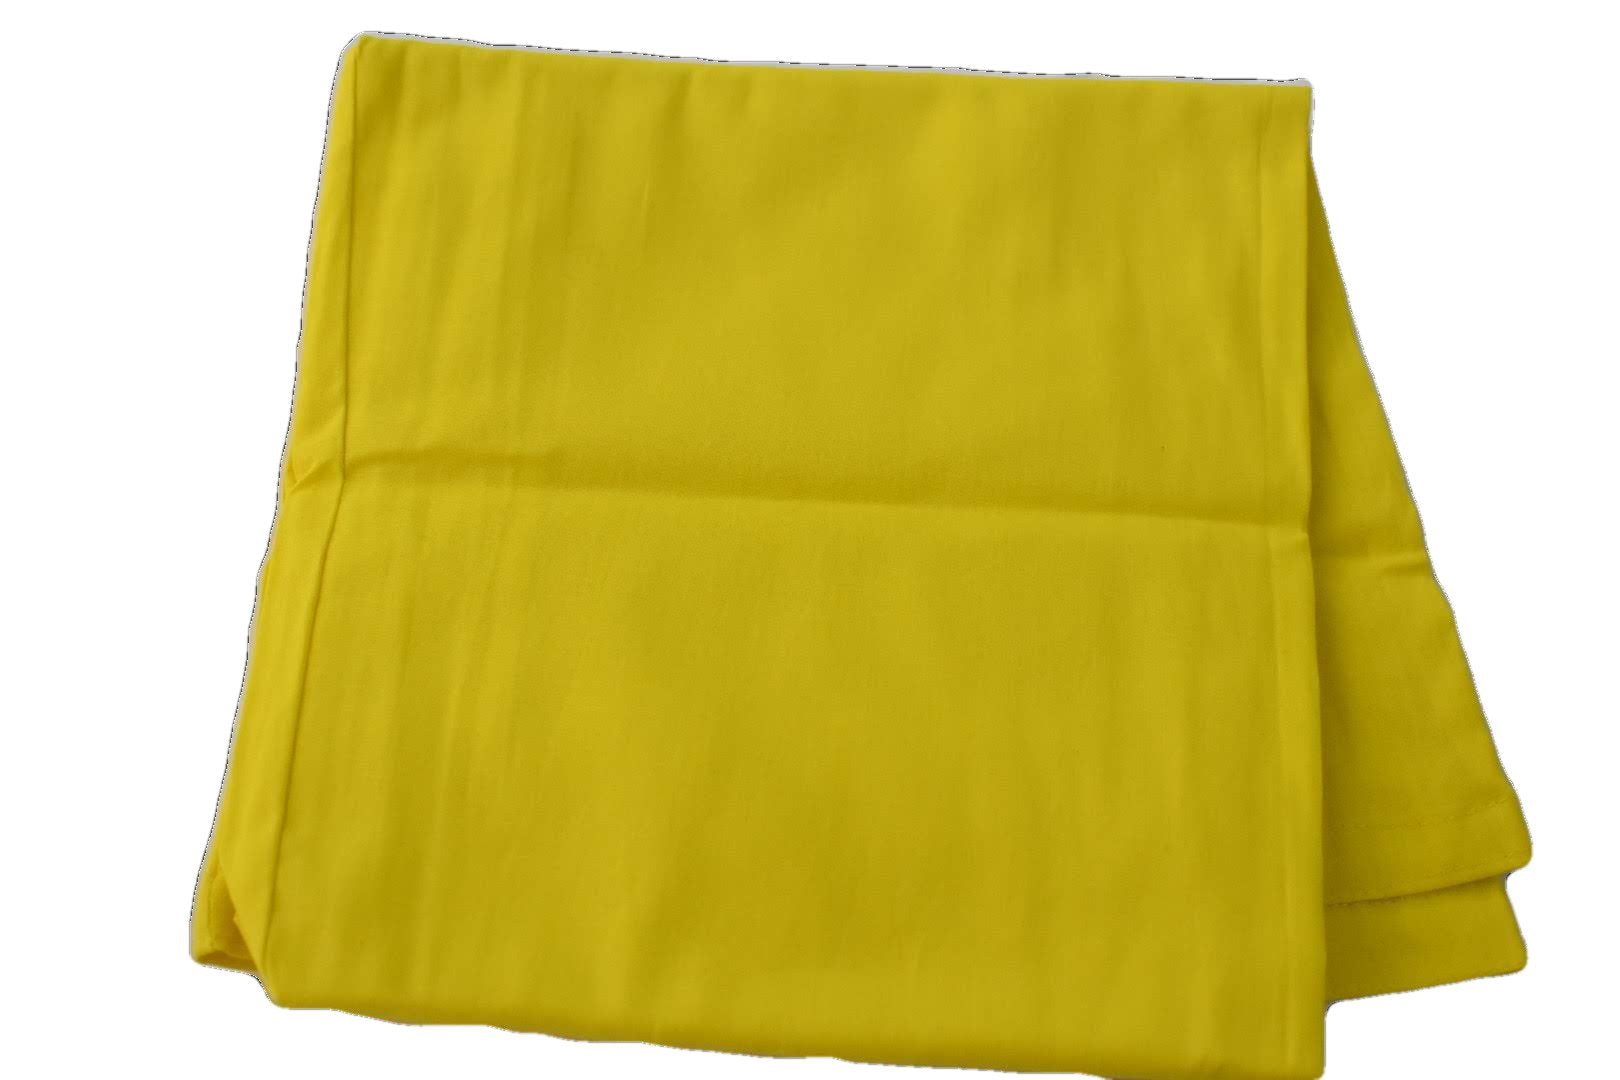 Underskirt / Petticoat High Quality Cotton - Various colors- Size Medium - Waist 30/32